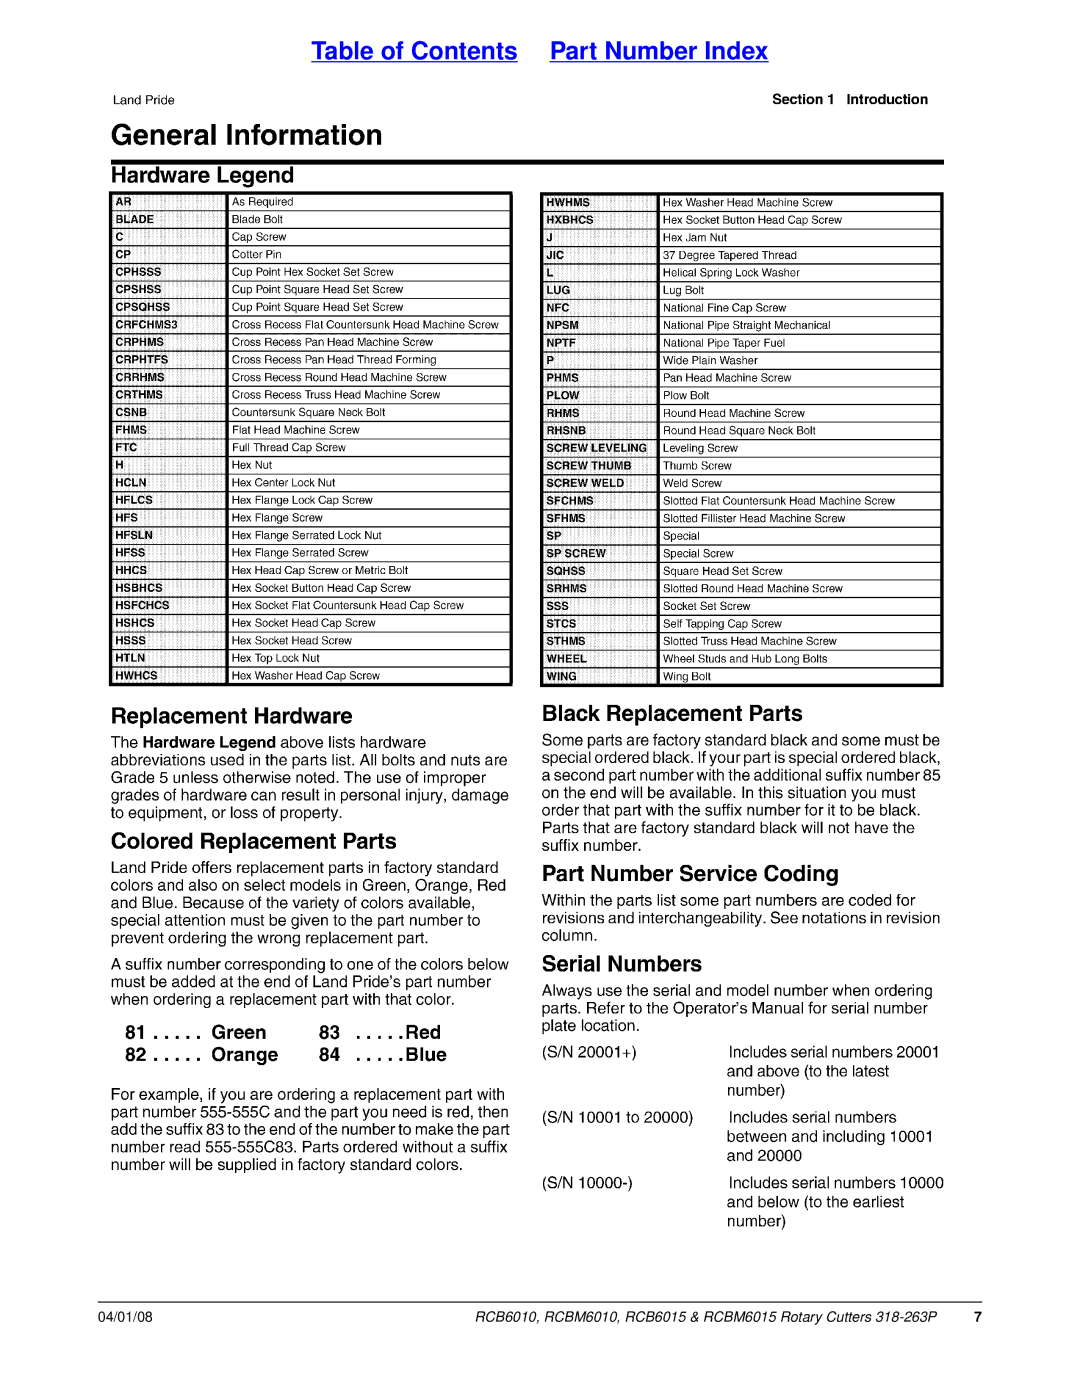 Land Pride RCBM6010, RCBM6015, RCB6015, RCB6010 manual Table of Contents Part Number Index 